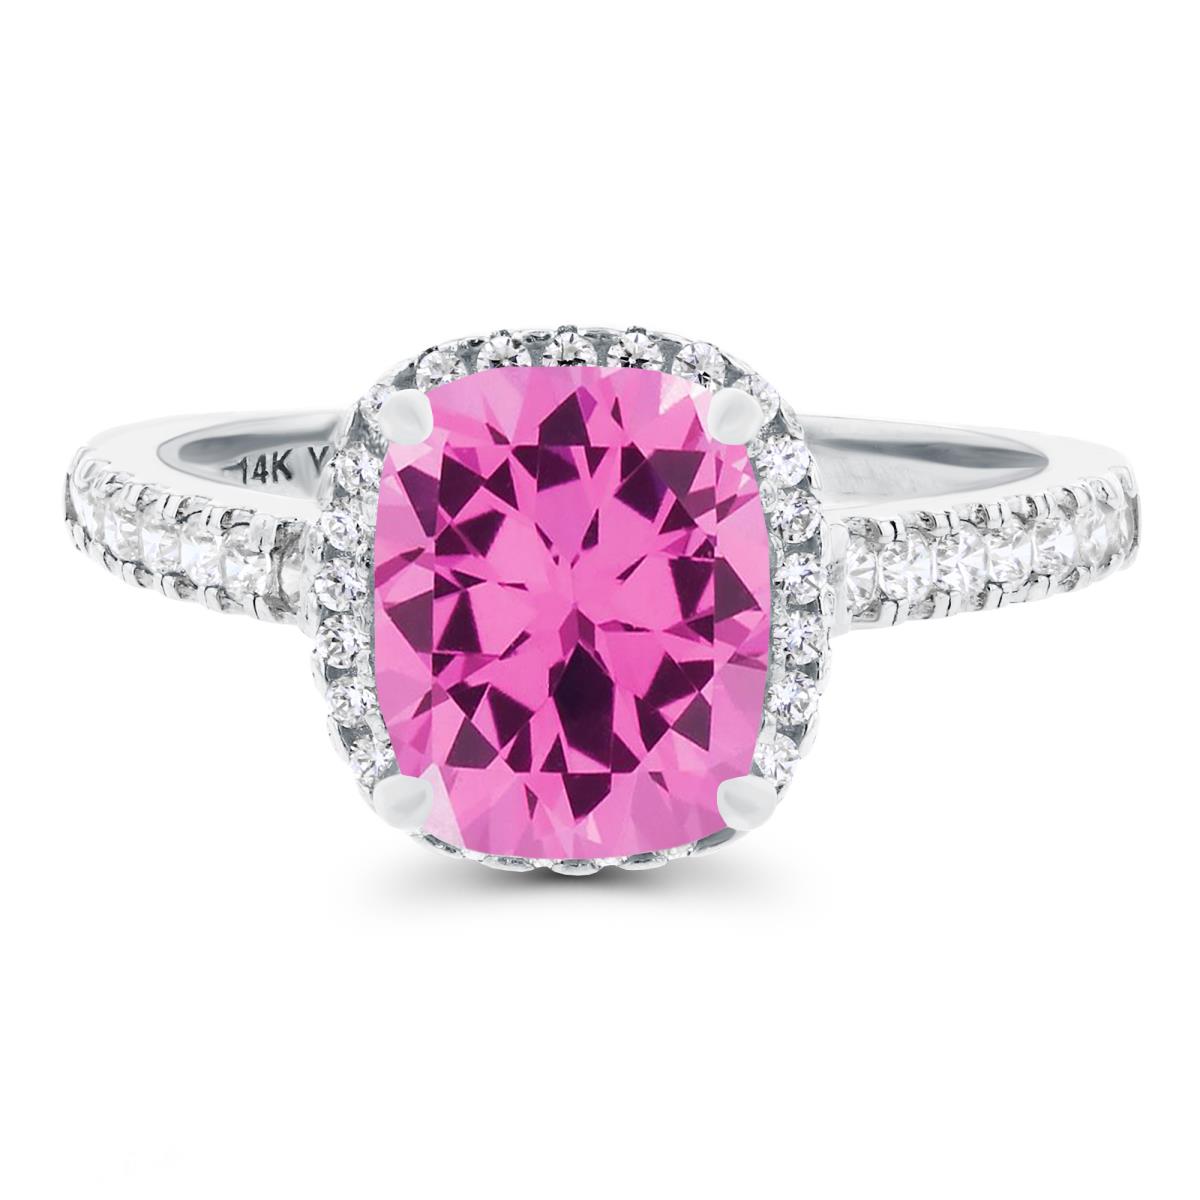 14K White Gold 9x7( 2 1/2 ctw) Cushion Cut Created Pink Sapphire & 0.35 ctw Diamond Halo Ring